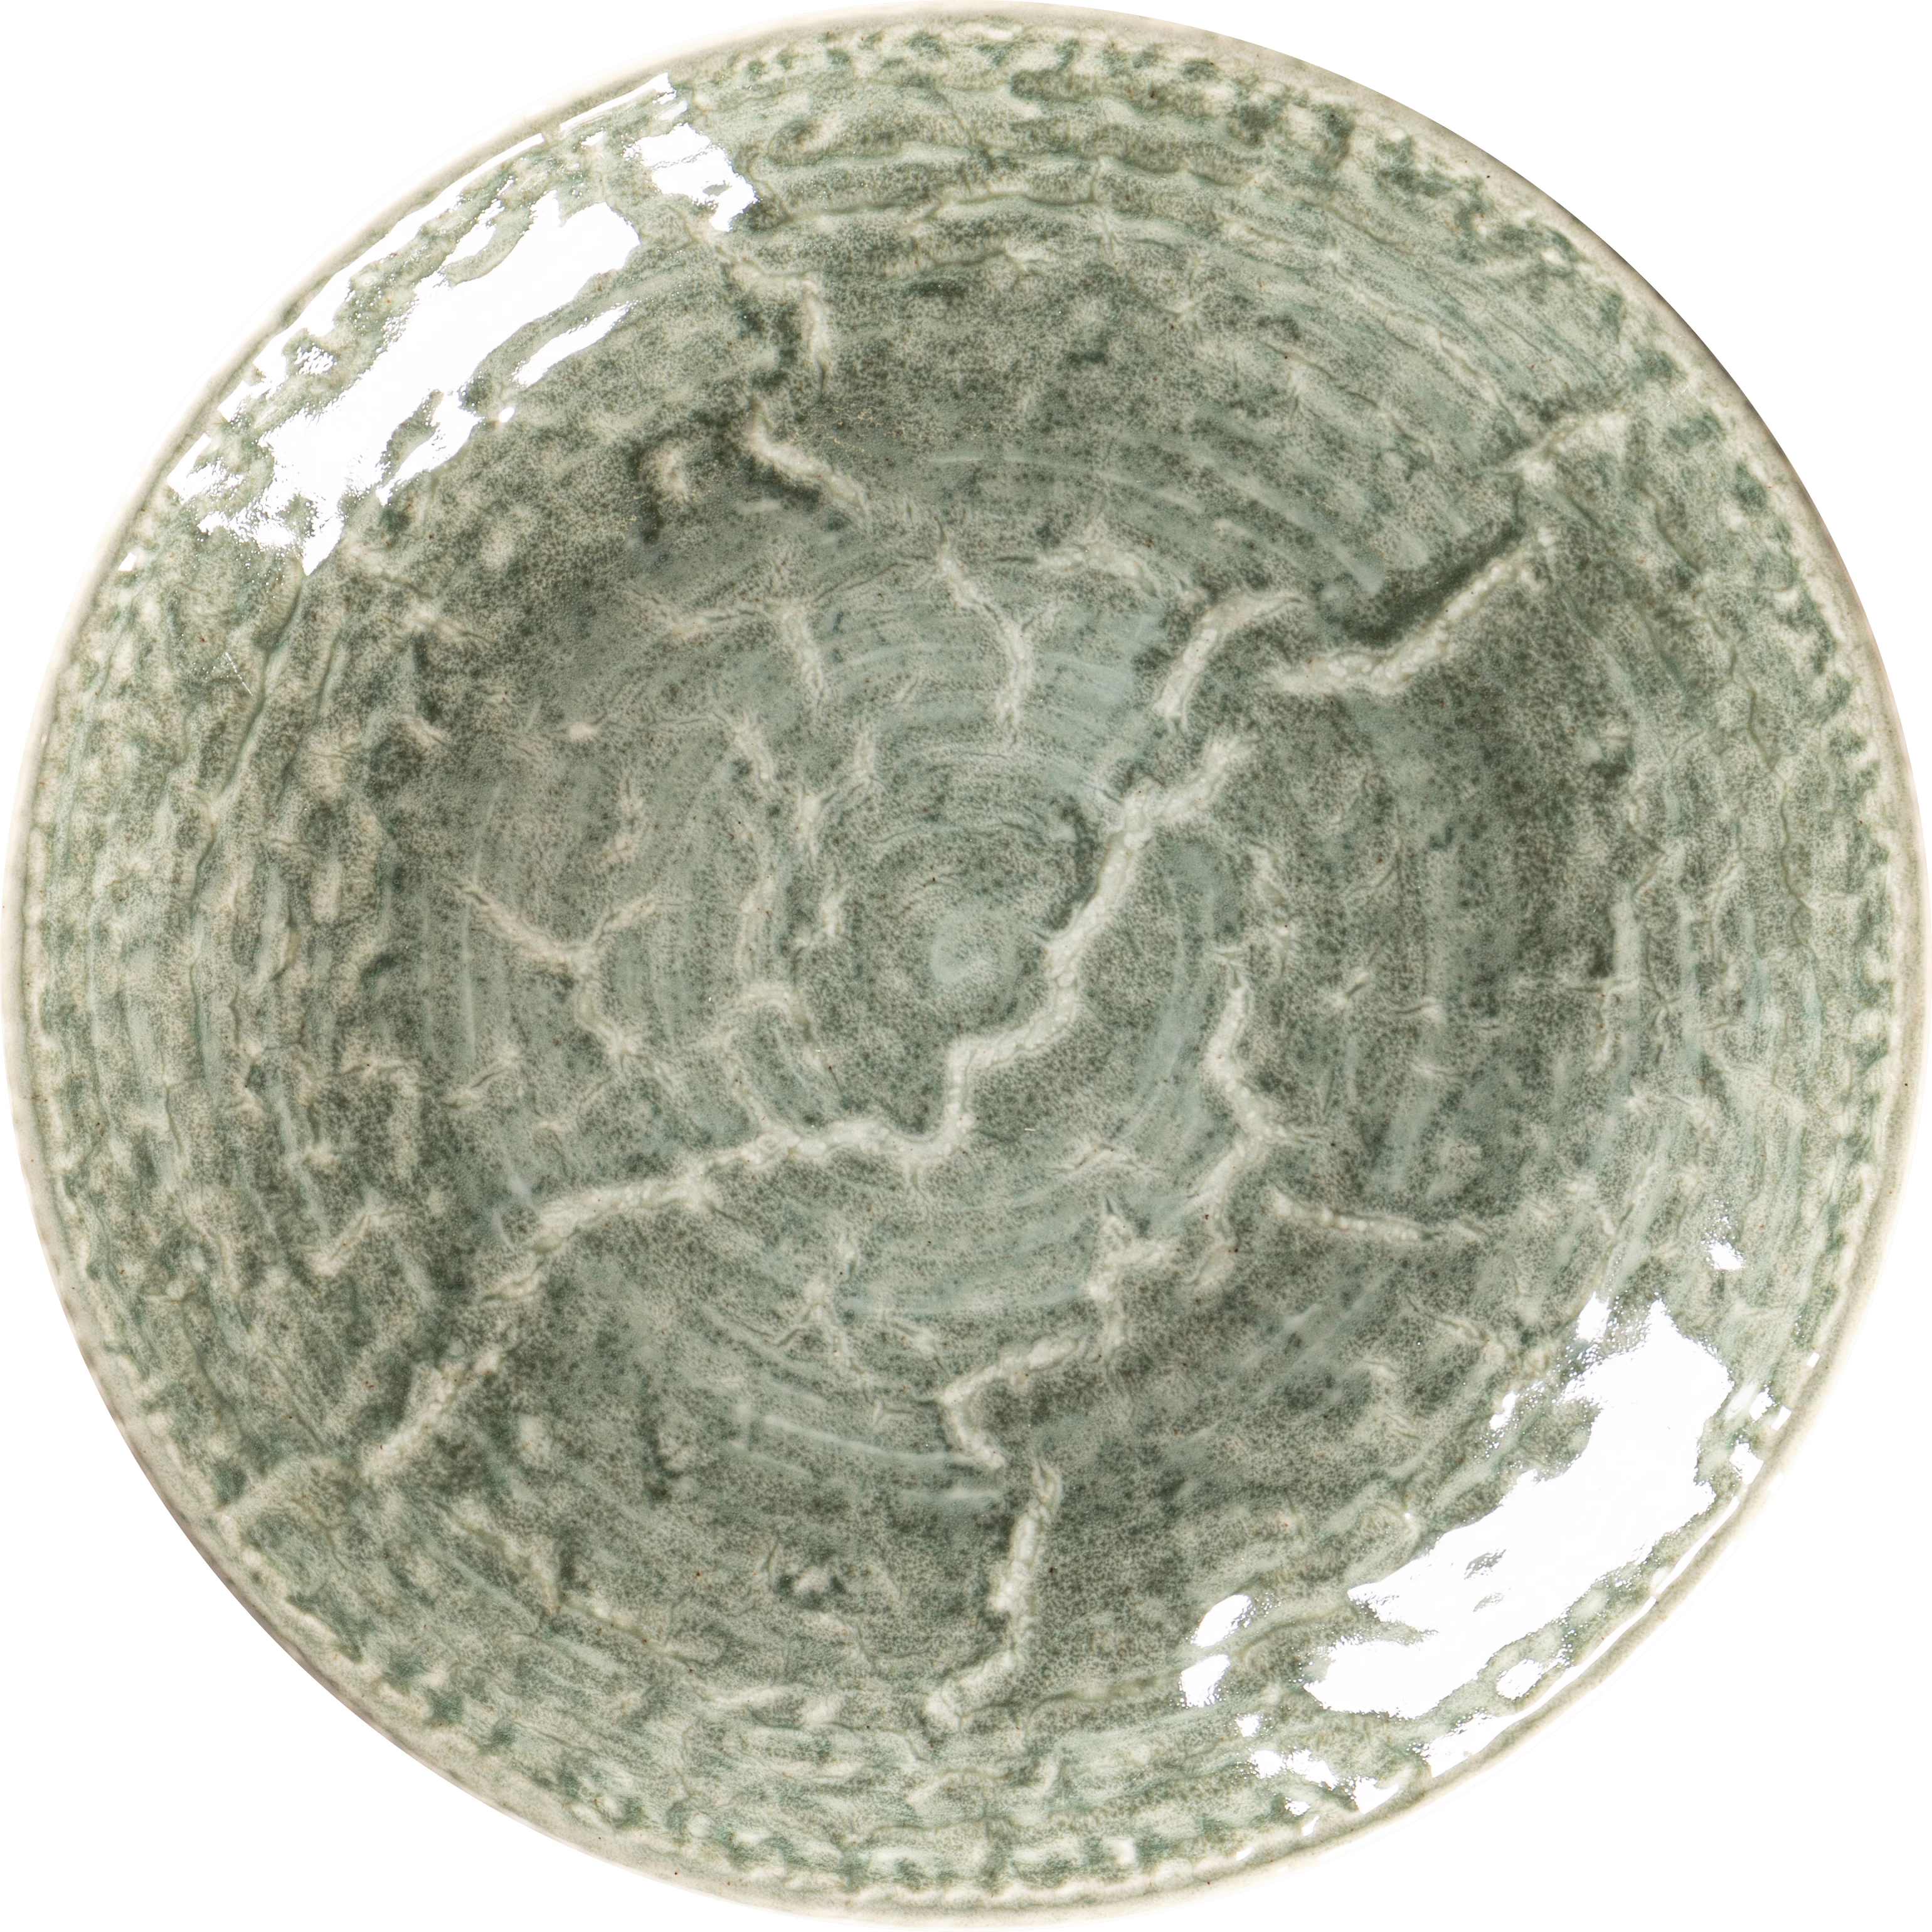 RAK Krush tallerken uden fane, dyb, grøn, ø26,1 cm